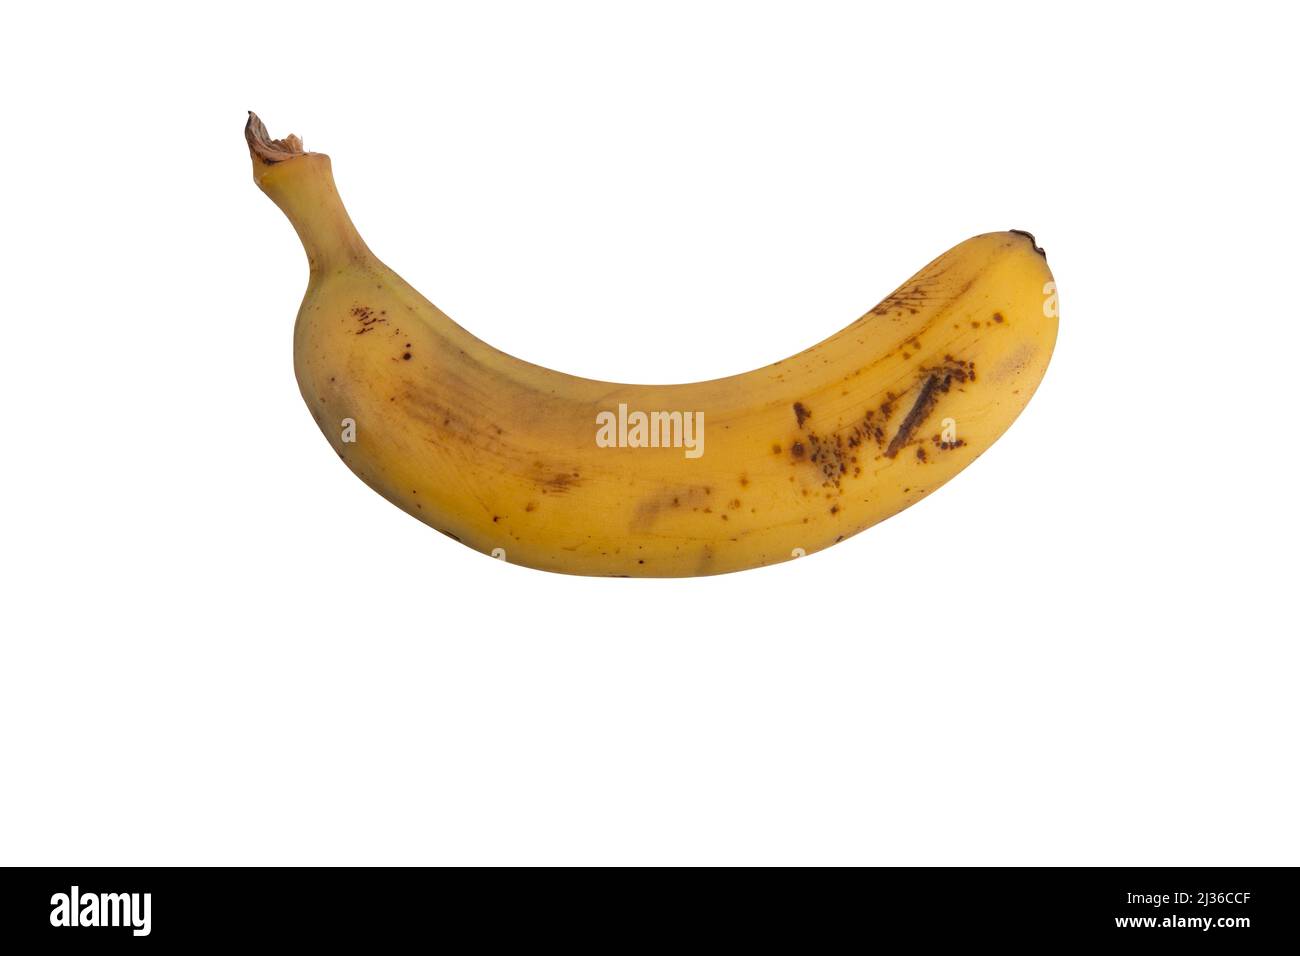 Freigestellte Banane bzw. Bananenschale. Banque D'Images